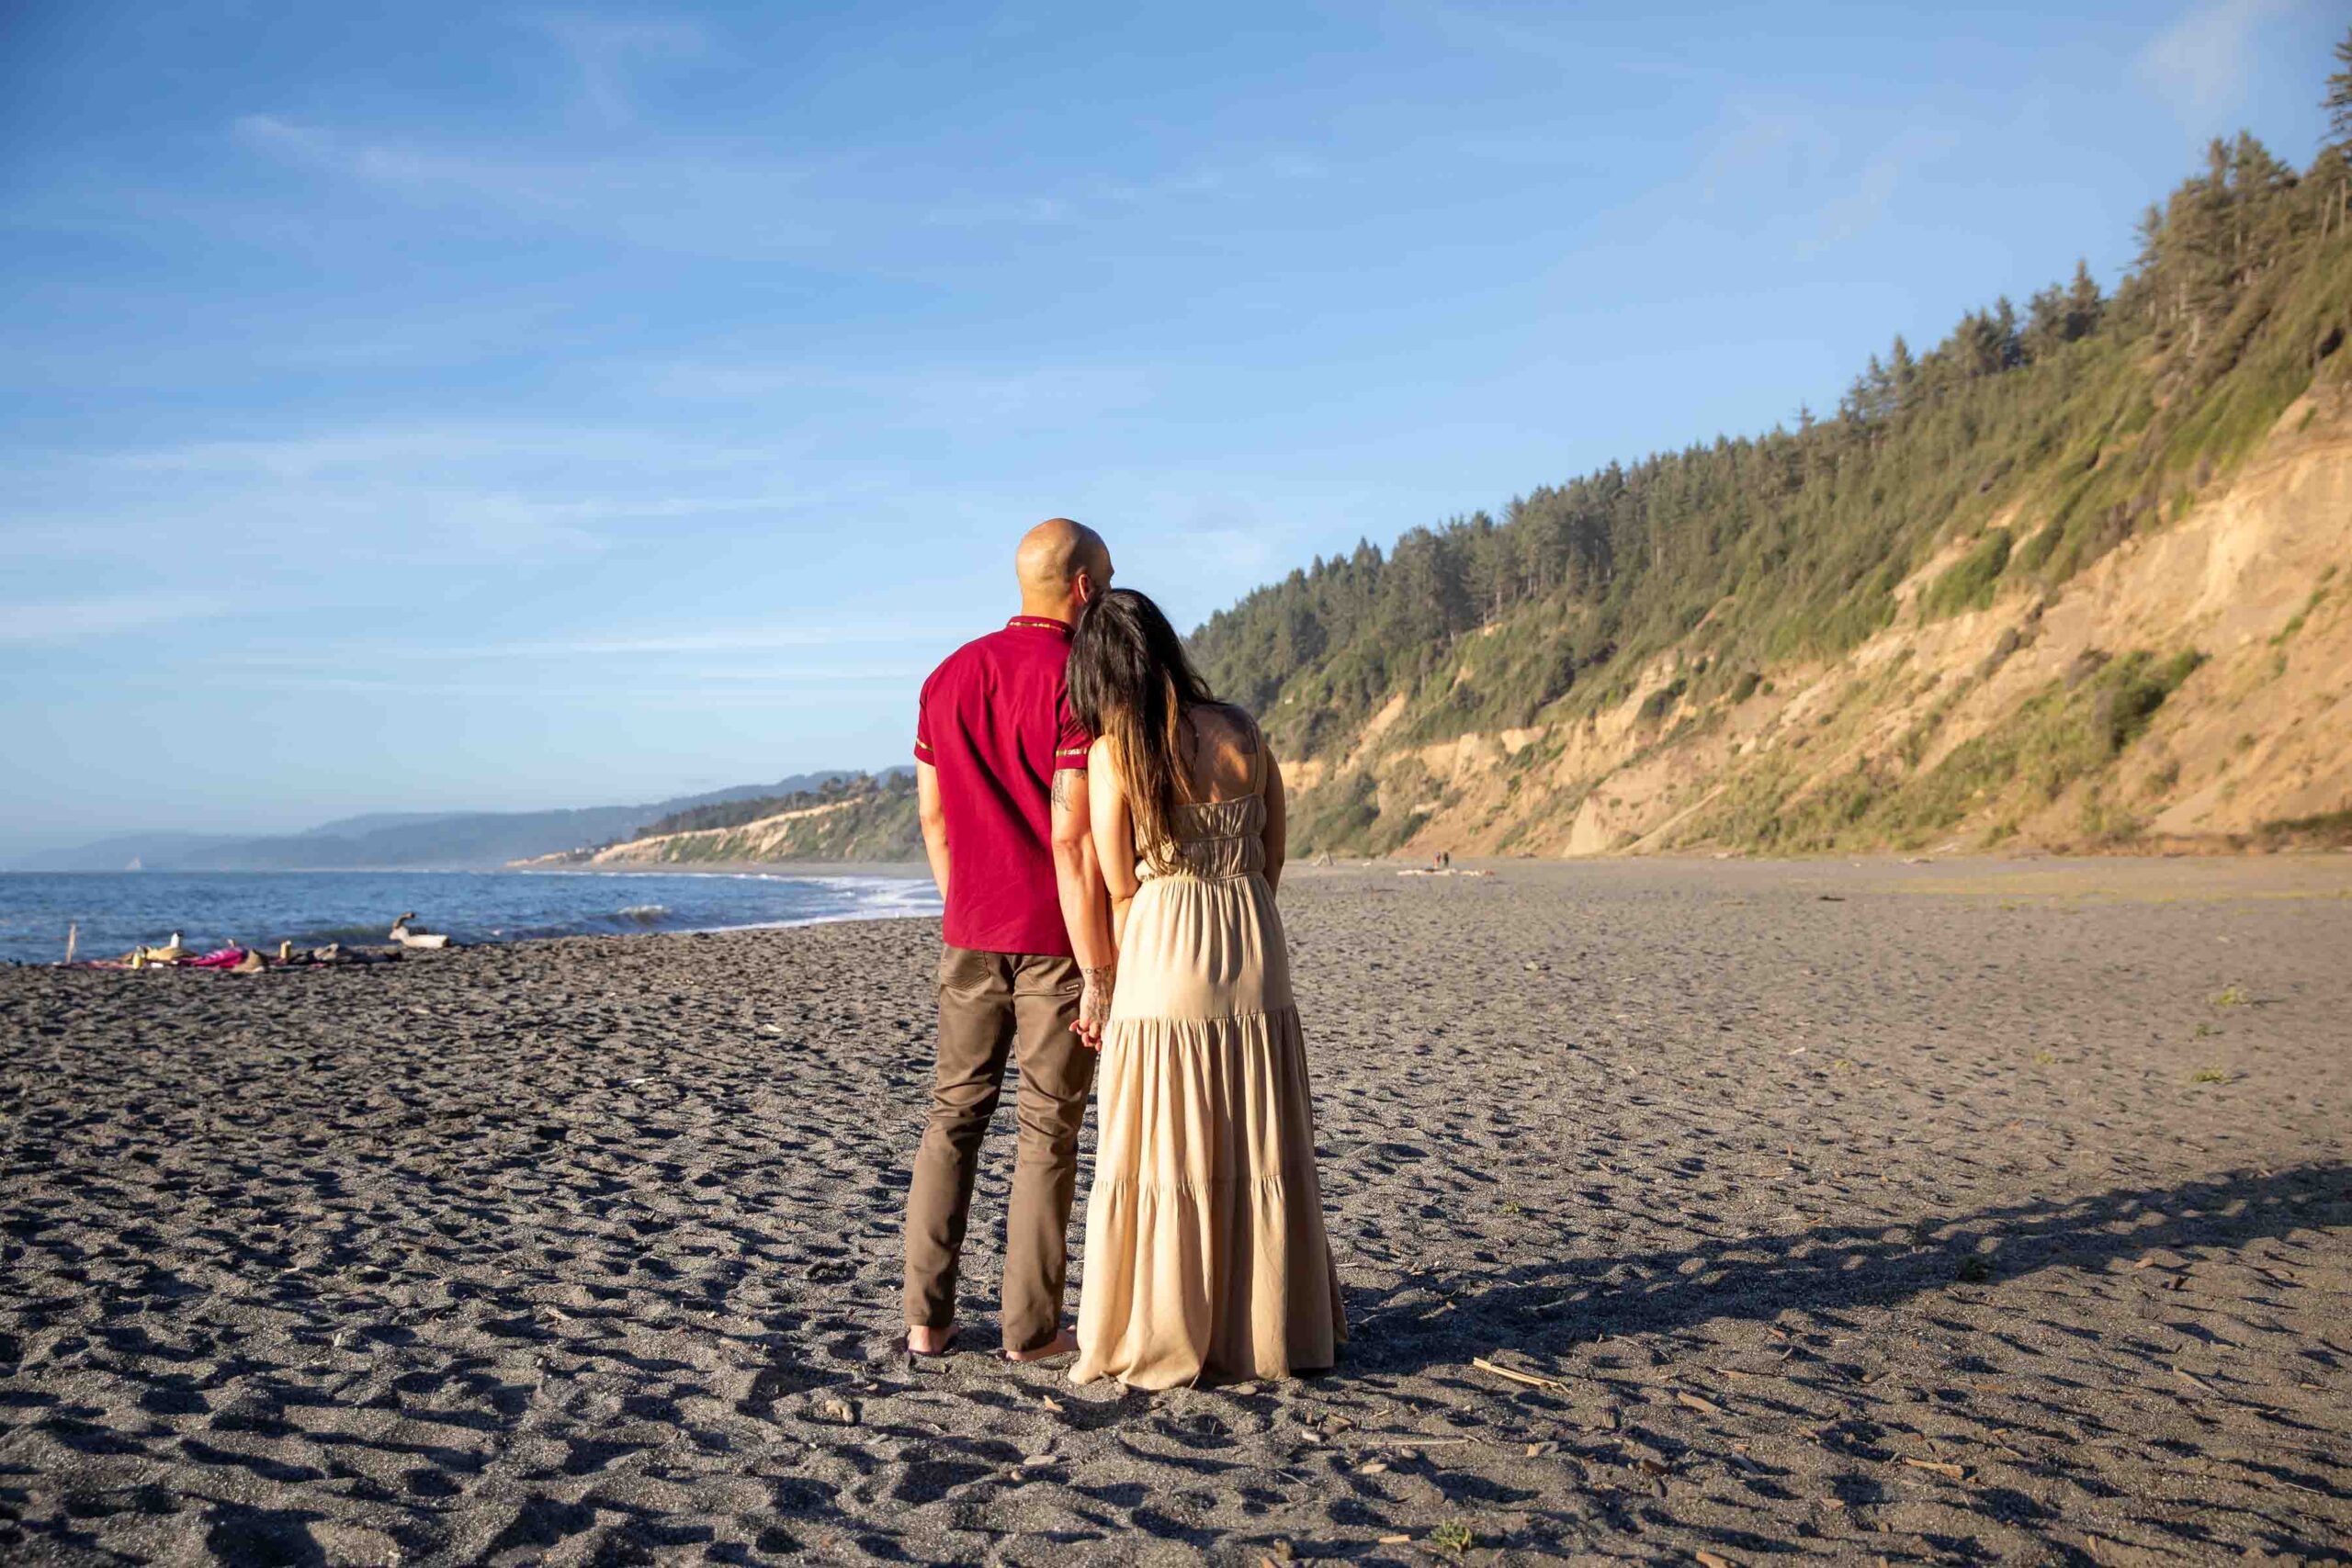 engaged couple sue-meg state park california wedding rock agate beach engagement 